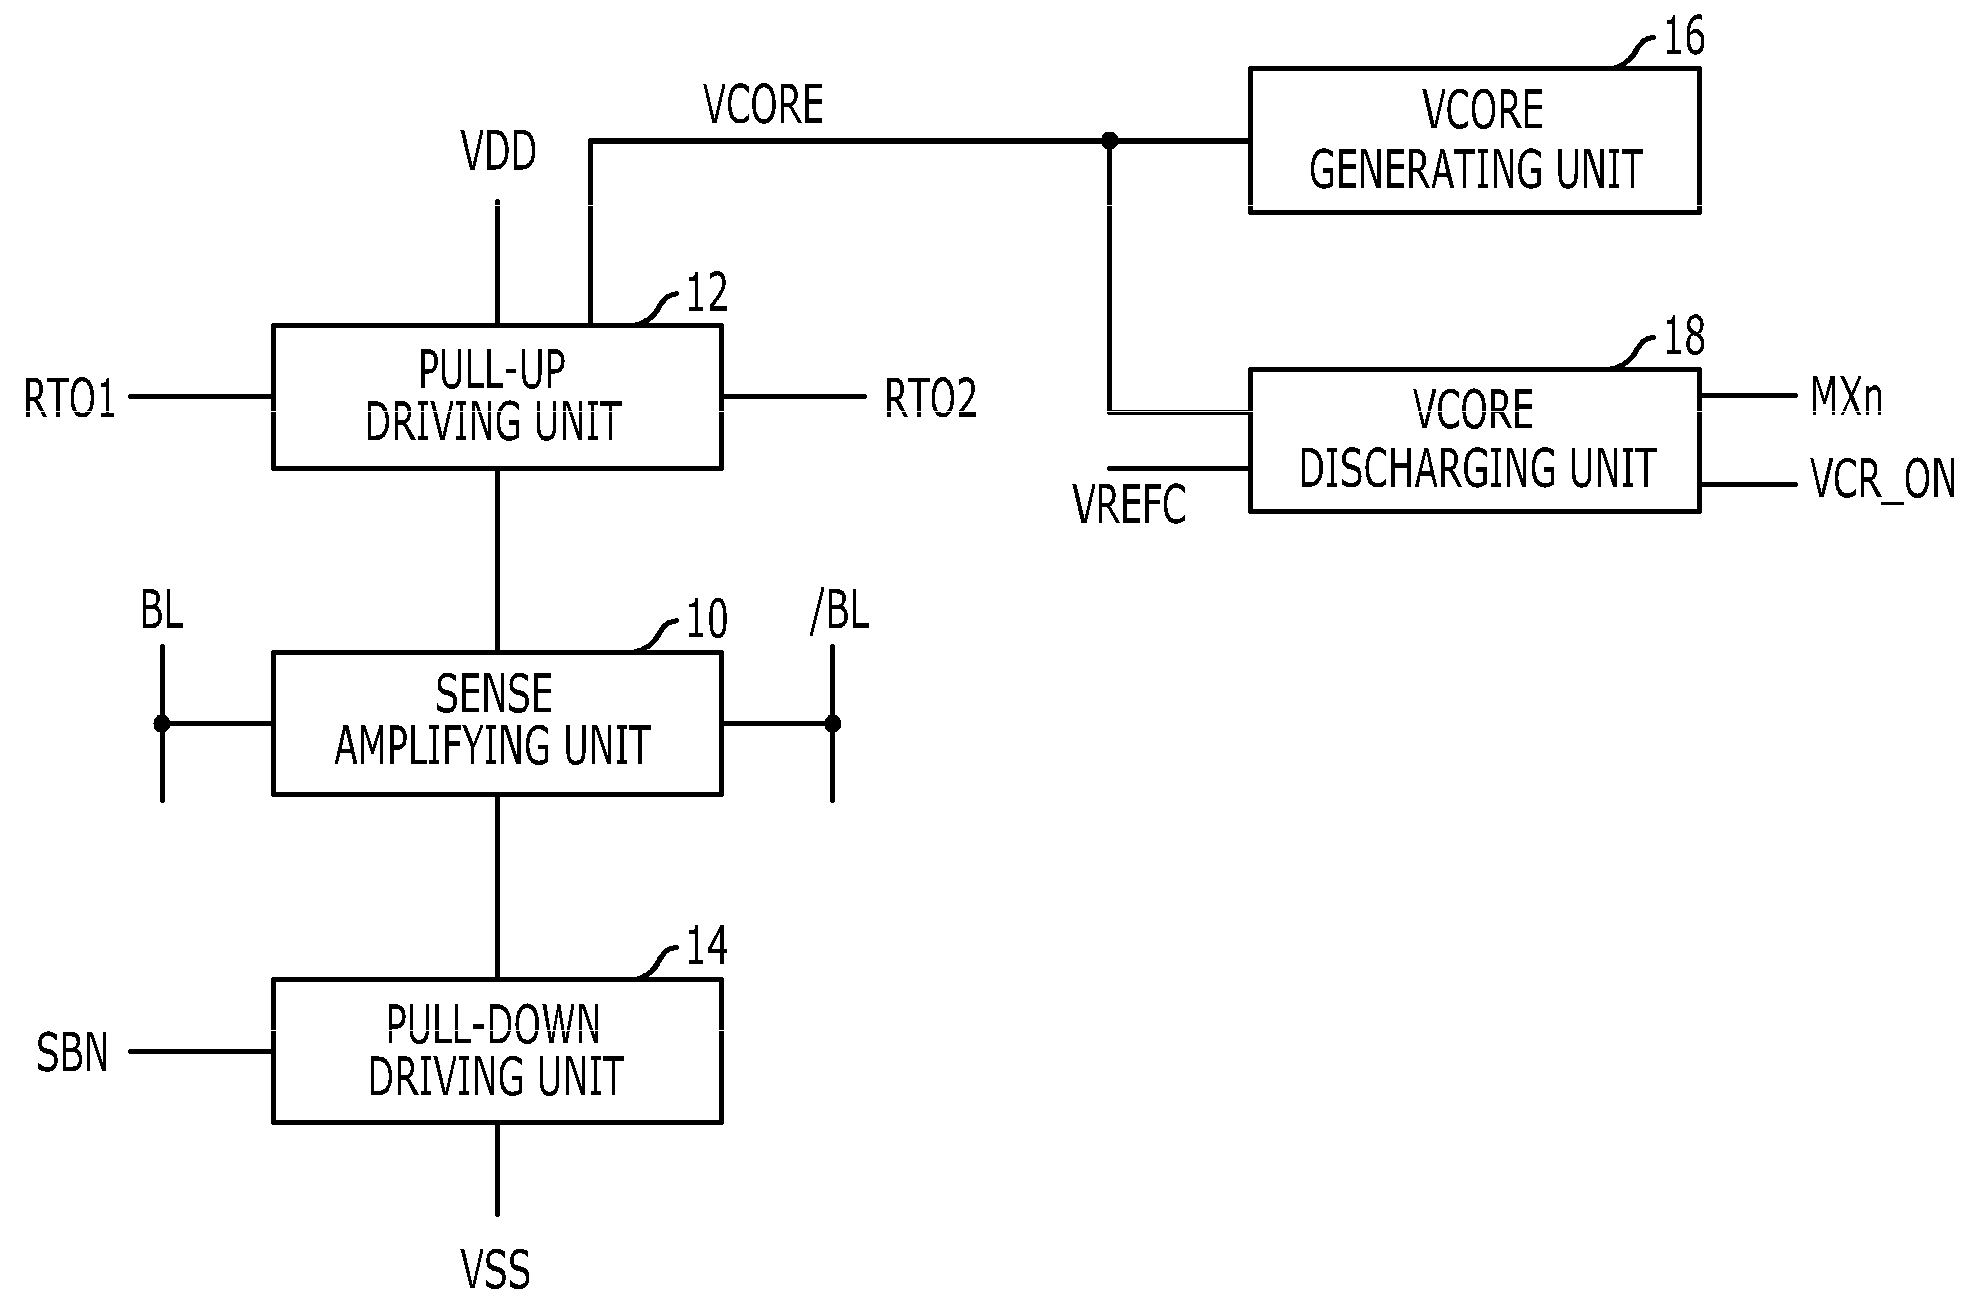 Sense amplifier driving control circuit and method